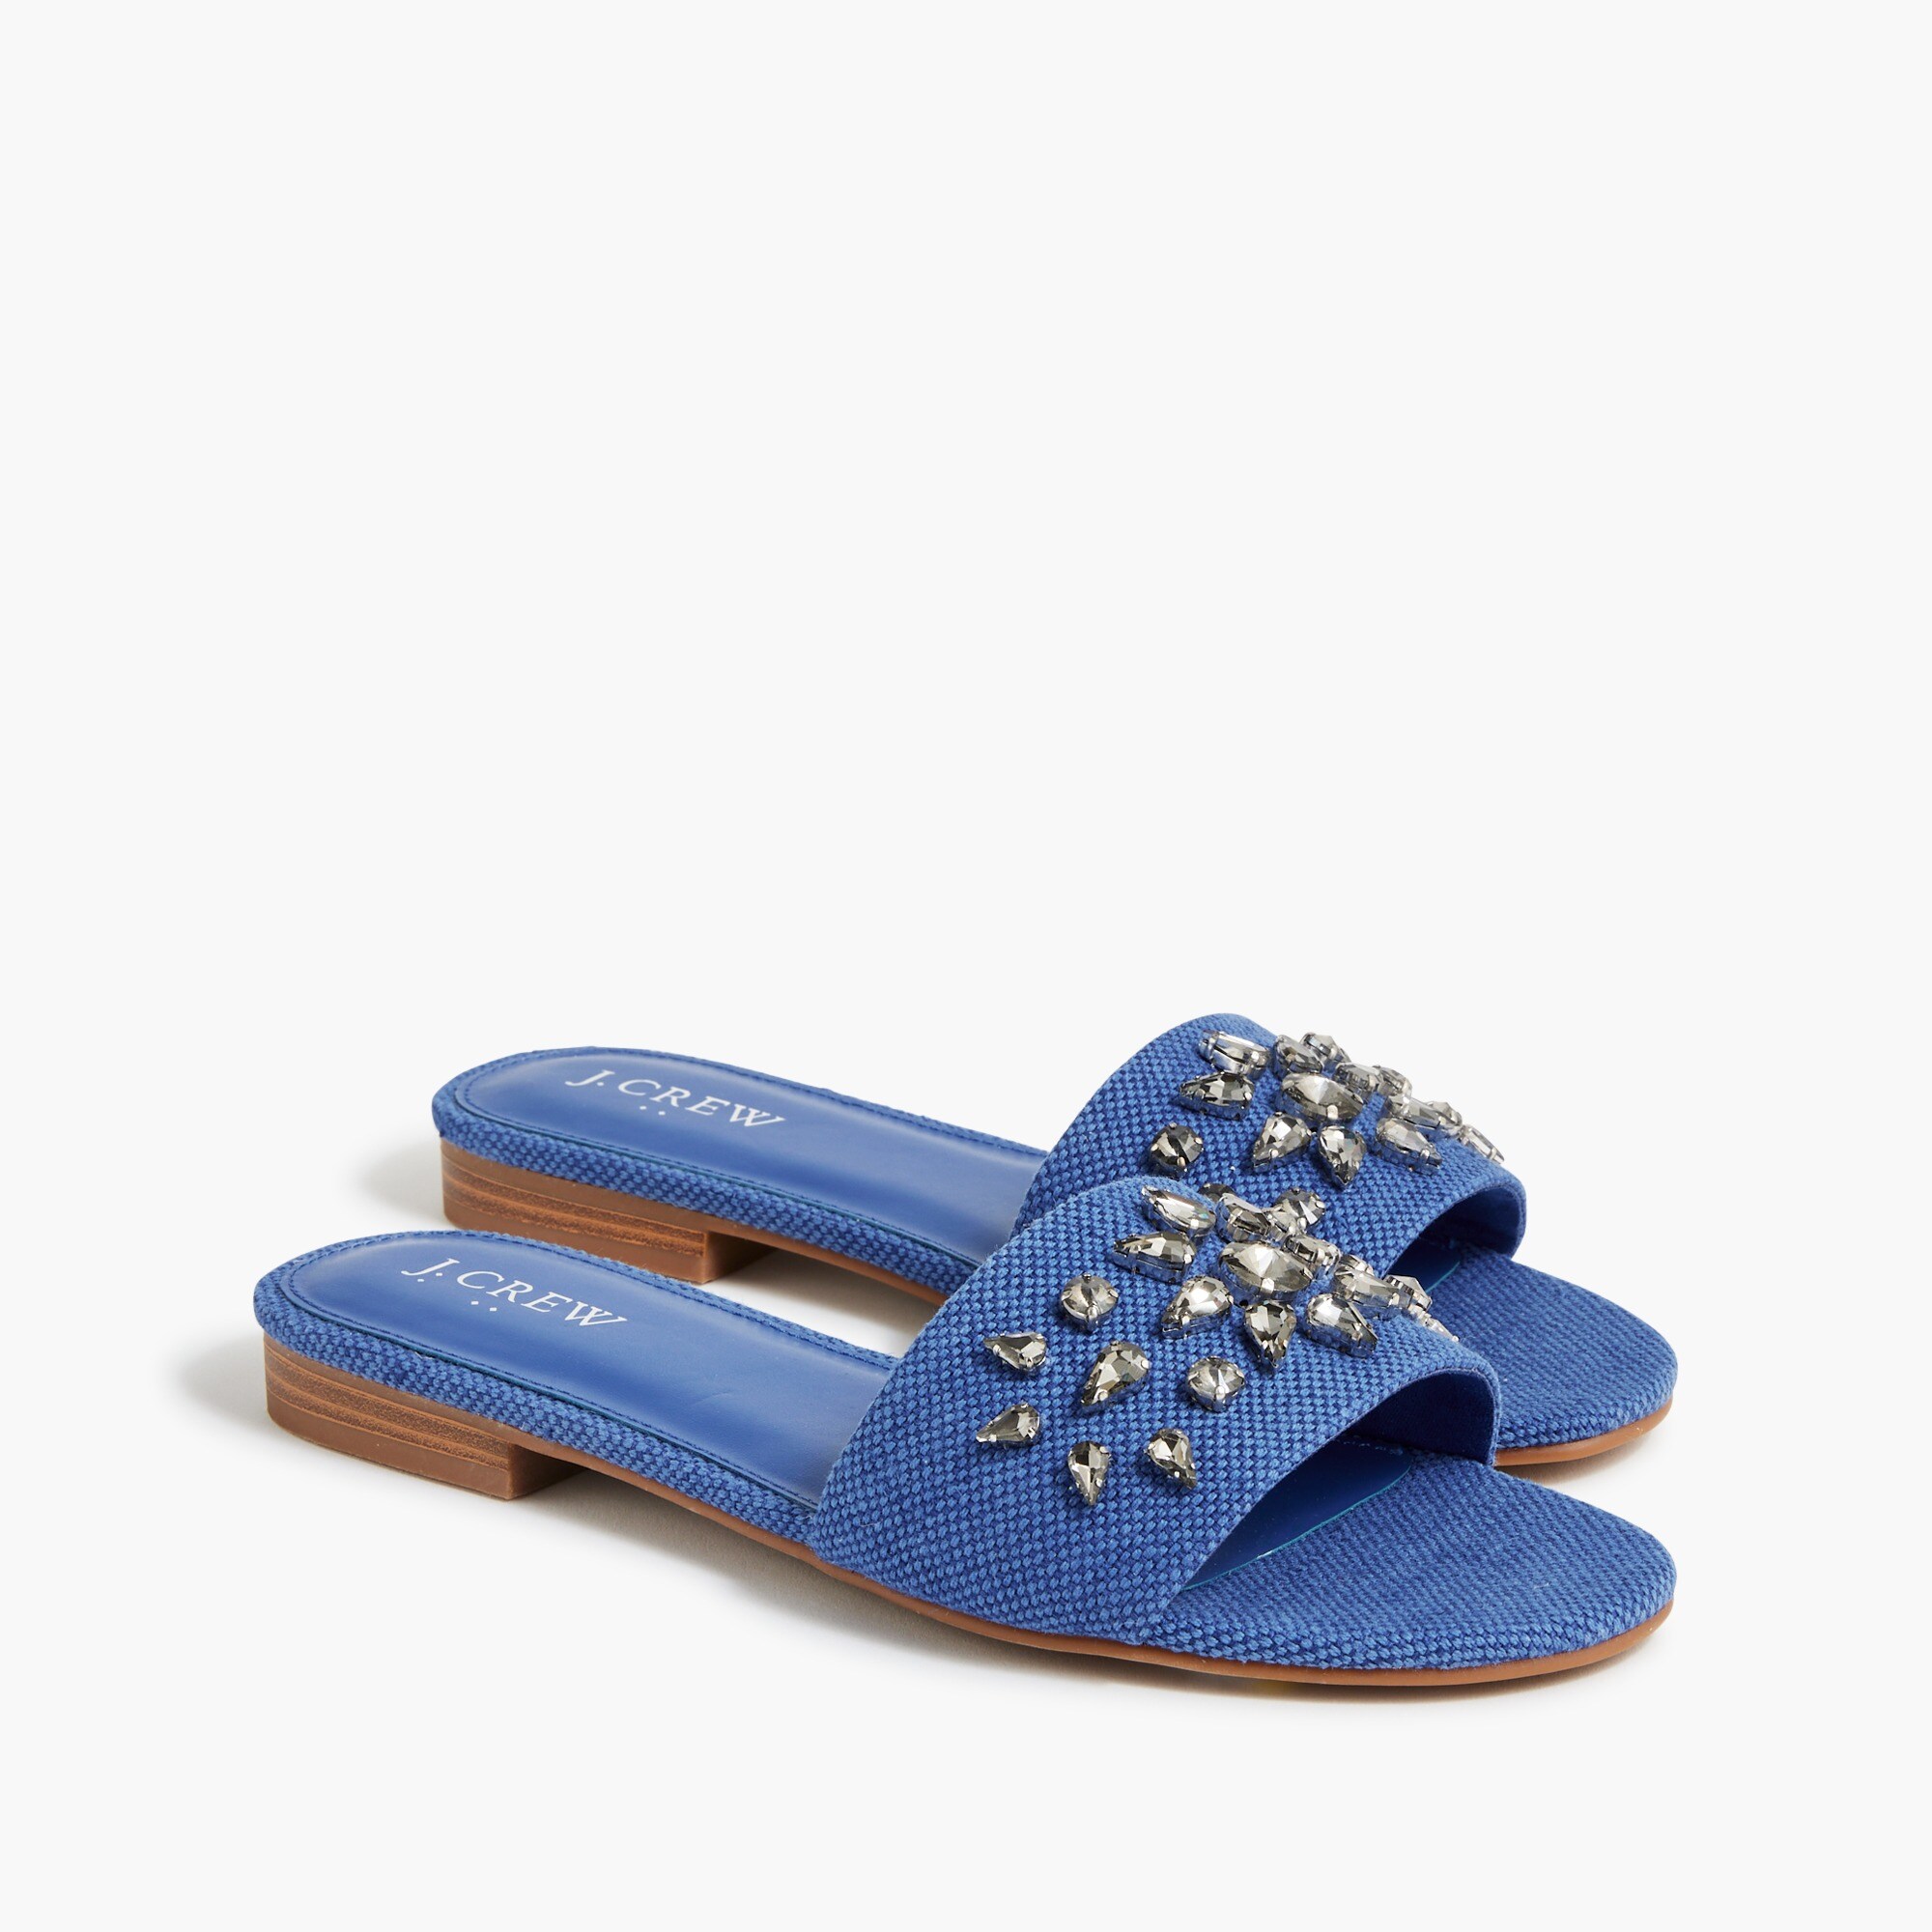  Jewel slide sandals